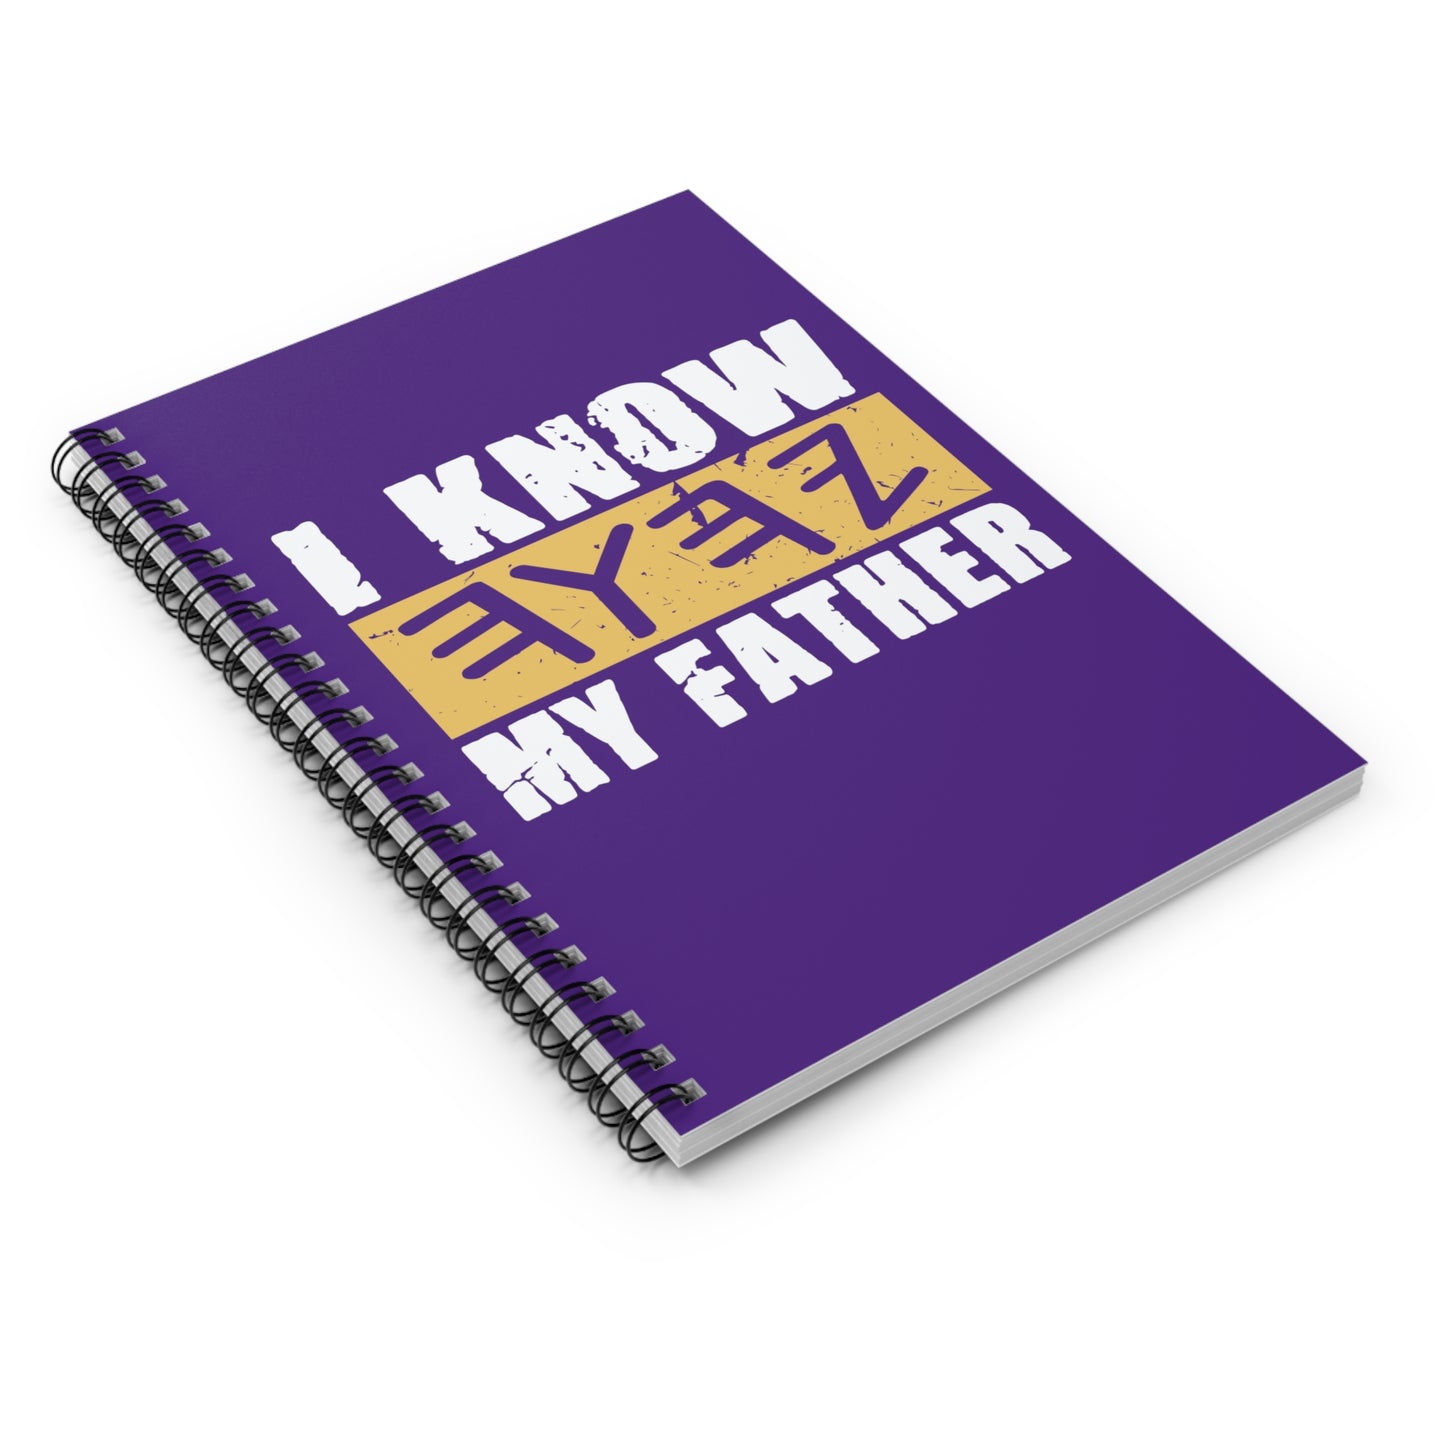 I Know My Father Yahuwah Purple Spiral Notebook Prayer Journal - Ruled Line